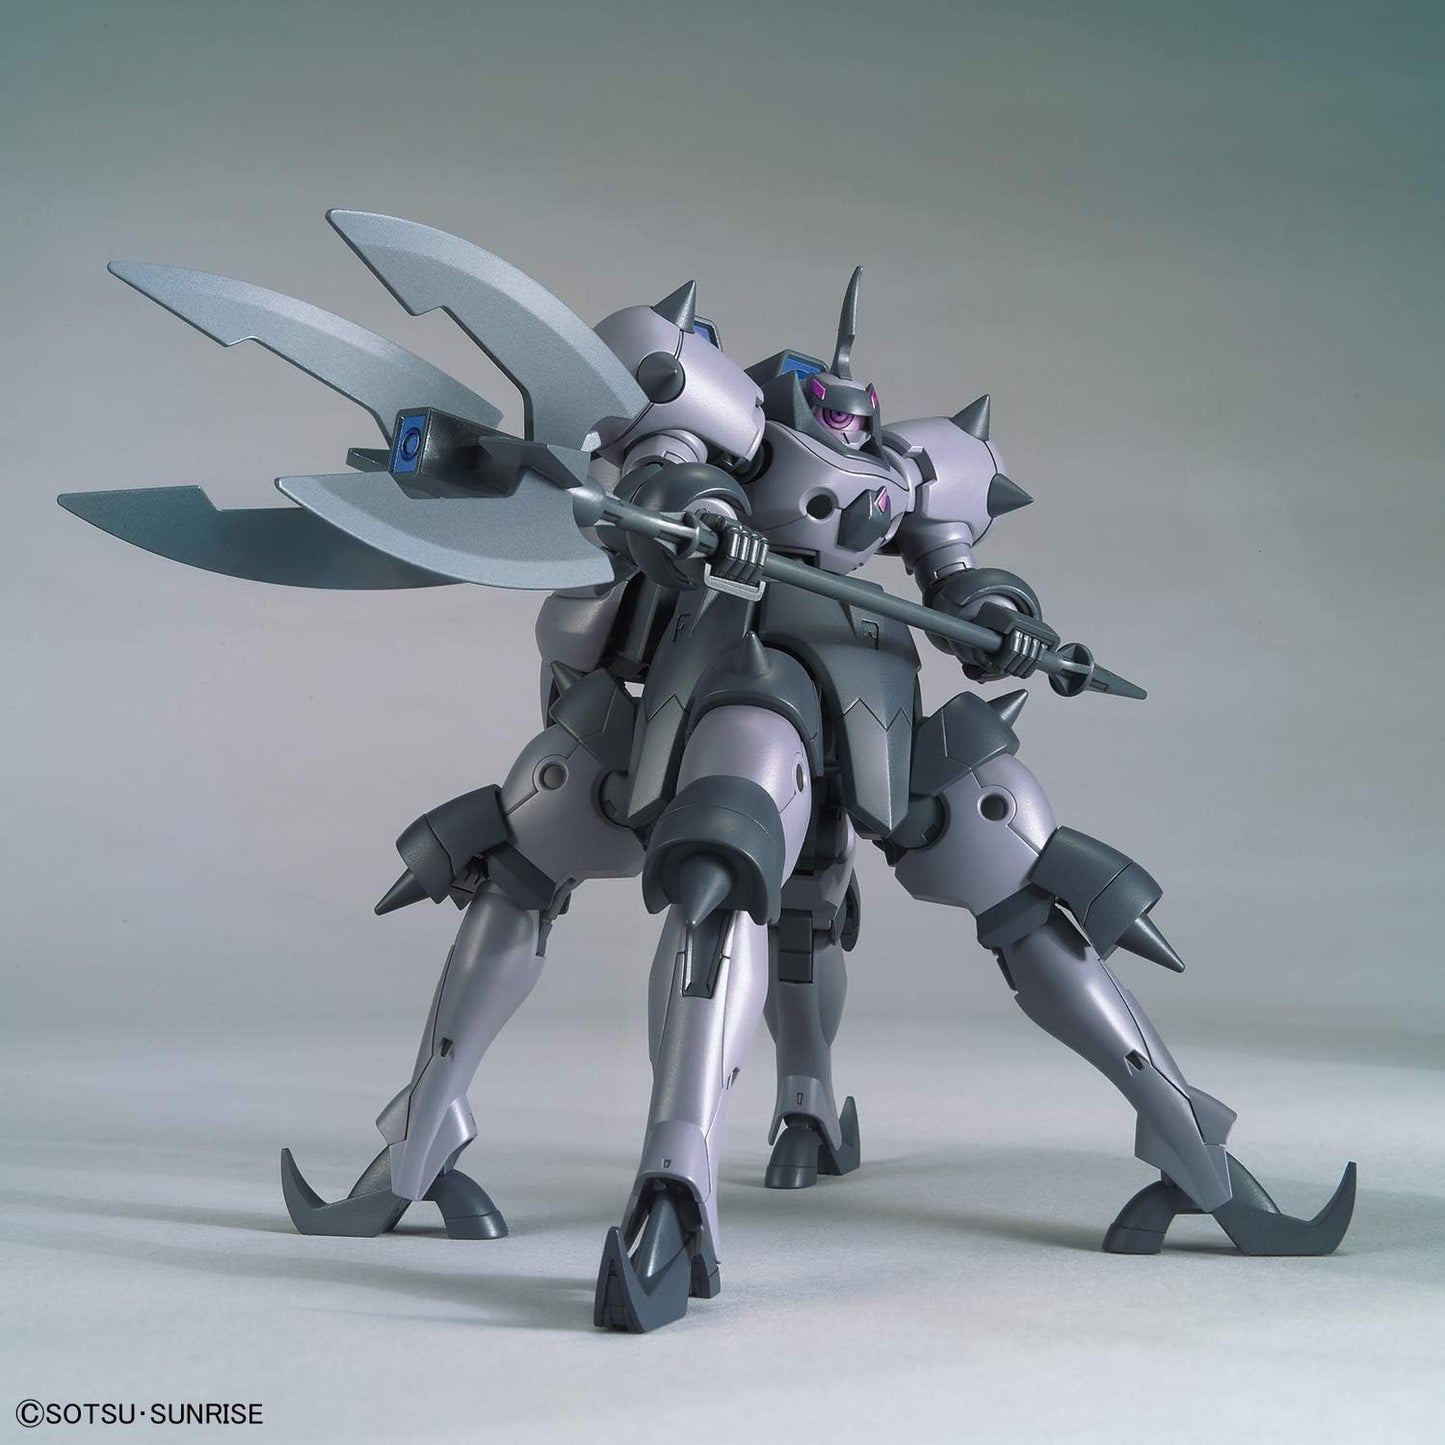 1/144 HGBD:R "Gundam Build Divers Re:Rise" Eldora Brute | animota